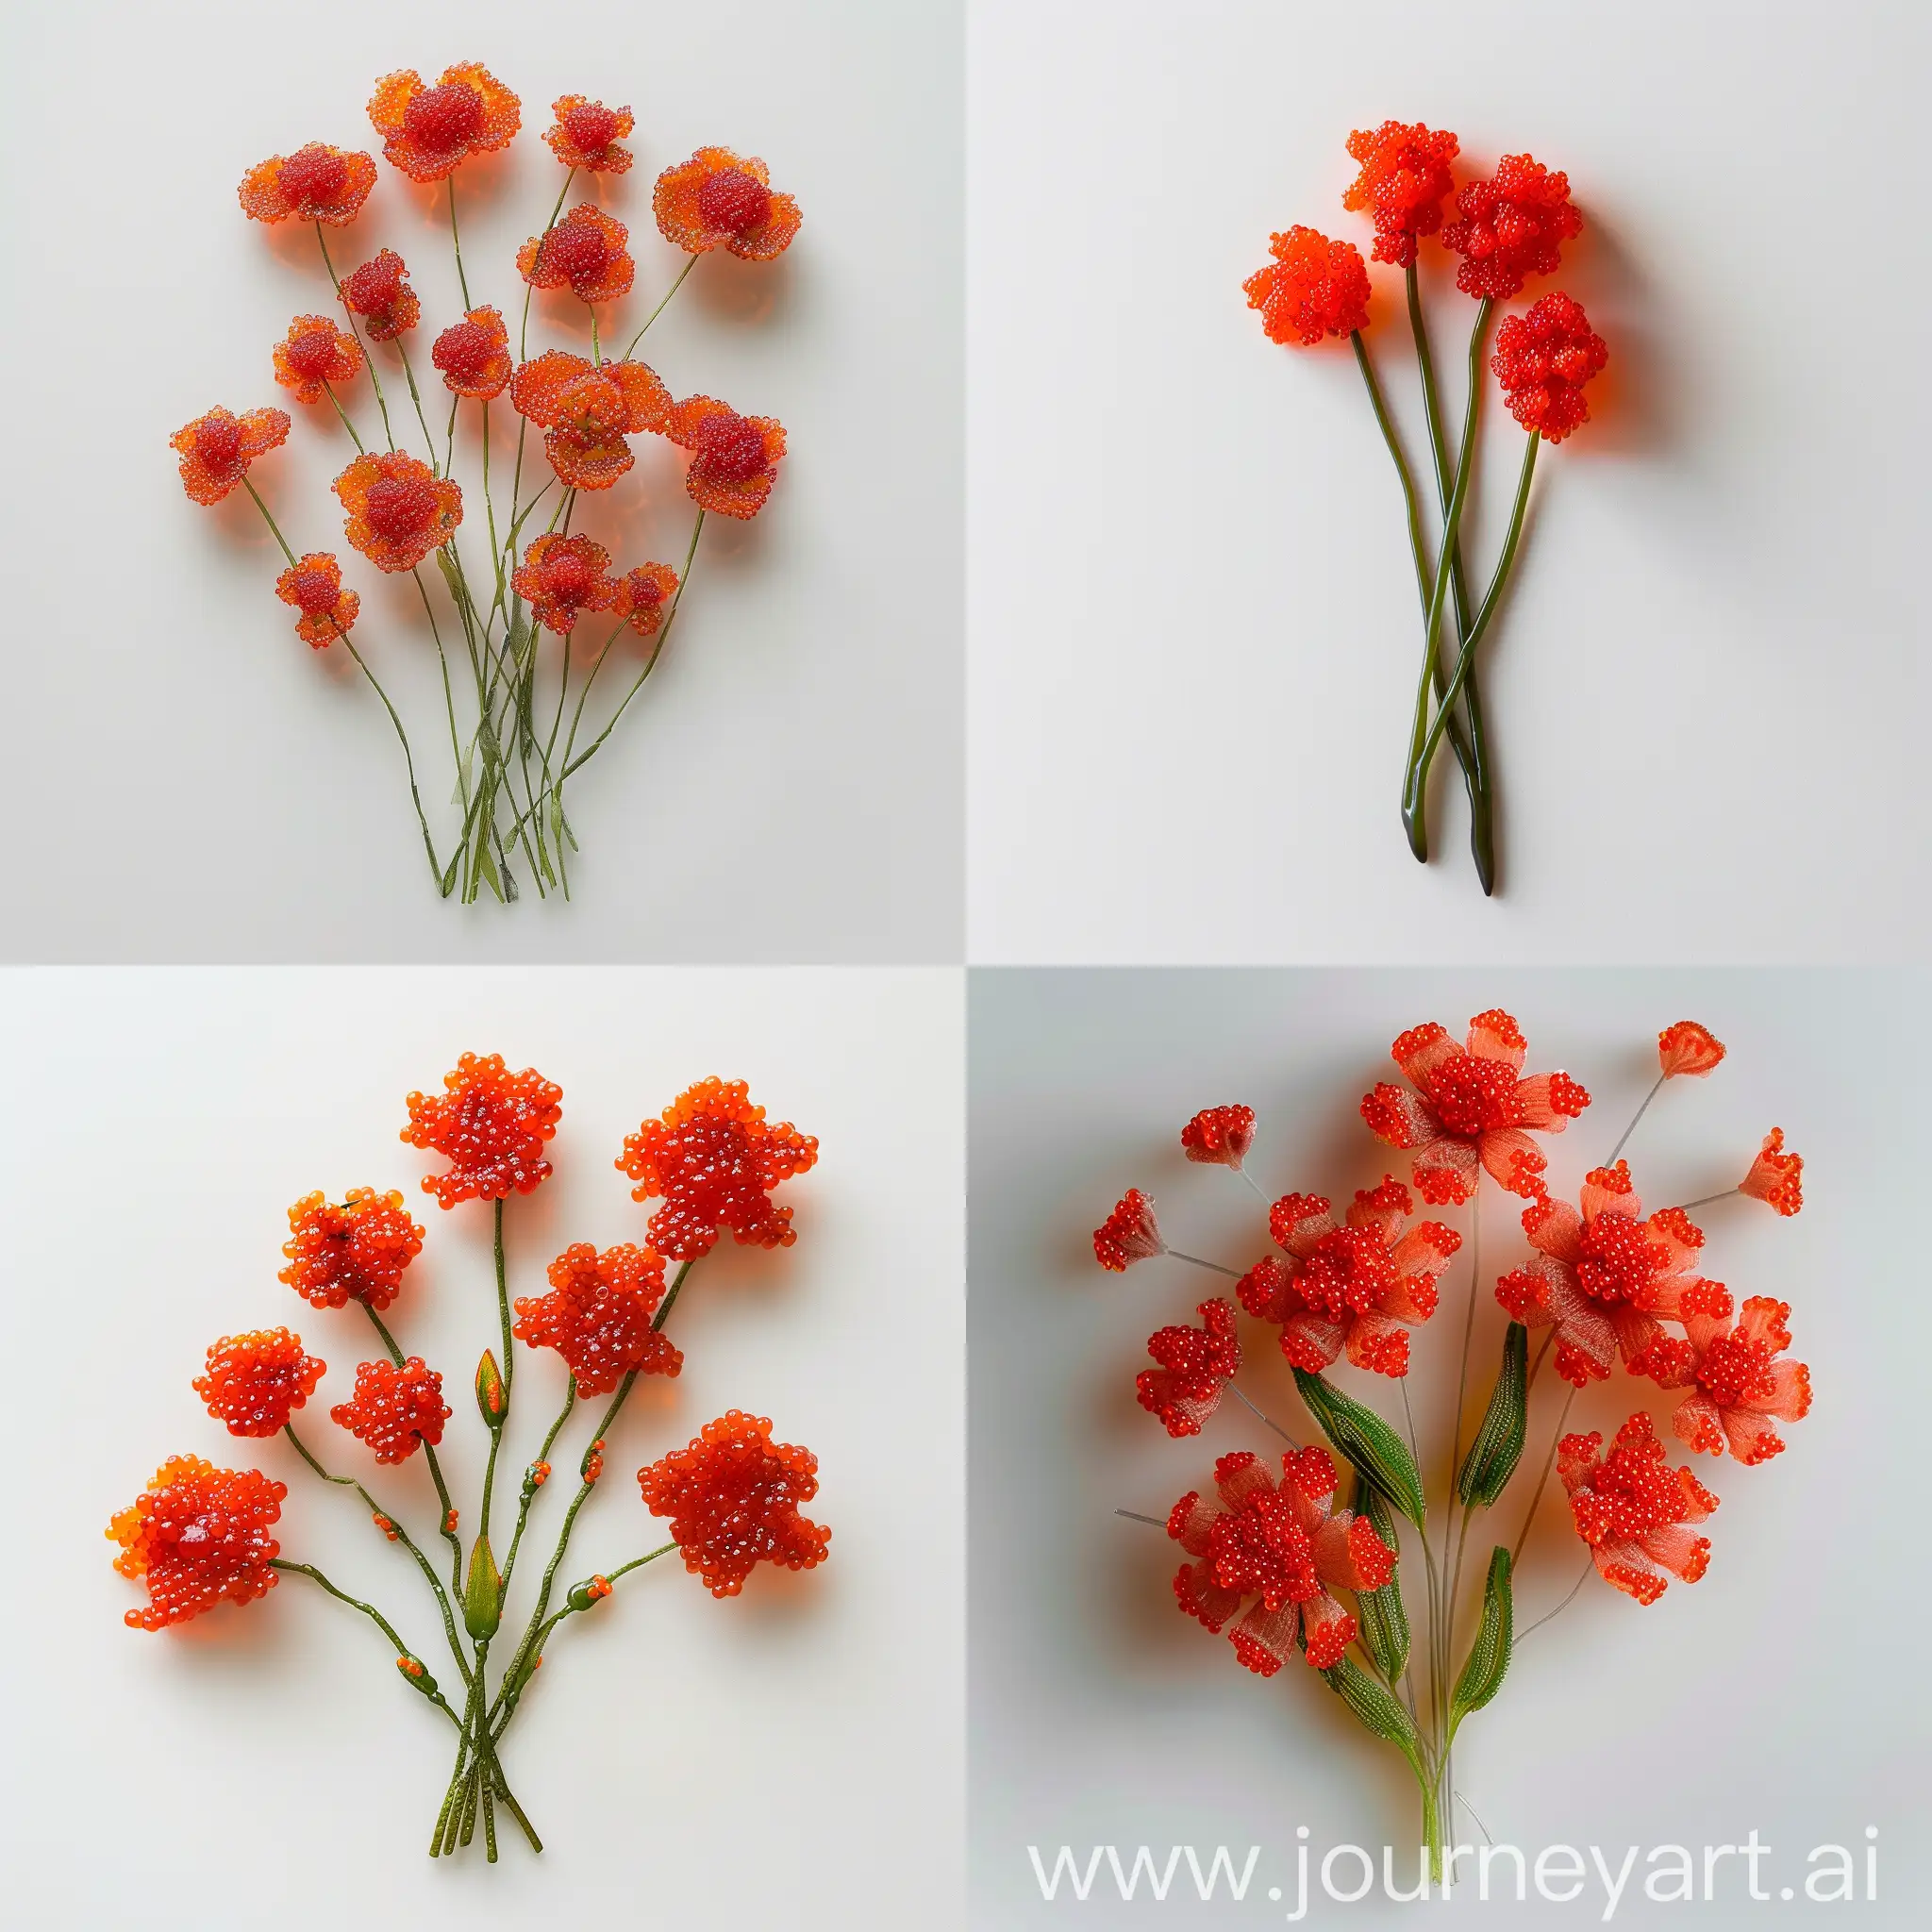 Elegant-Minimalist-Caviar-Flower-Bouquet-Red-Caviar-Artistry-on-White-Background